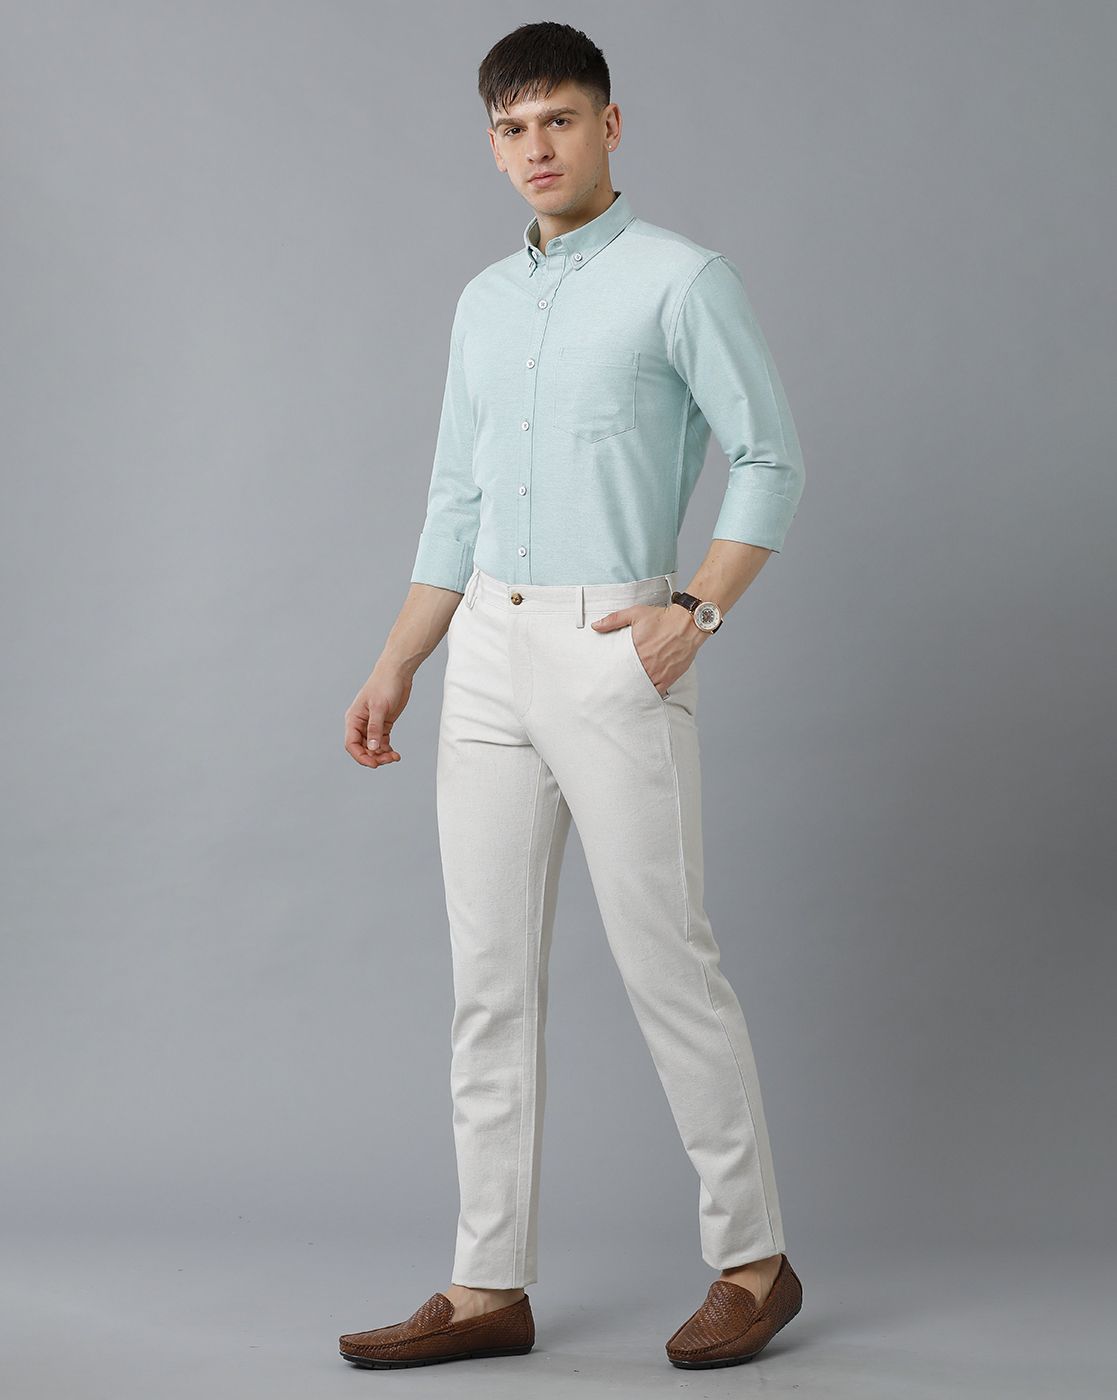 Men's Brown Blazer, Light Blue Long Sleeve Shirt, White Dress Pants | Mens  fashion, Well dressed men, Mens outfits